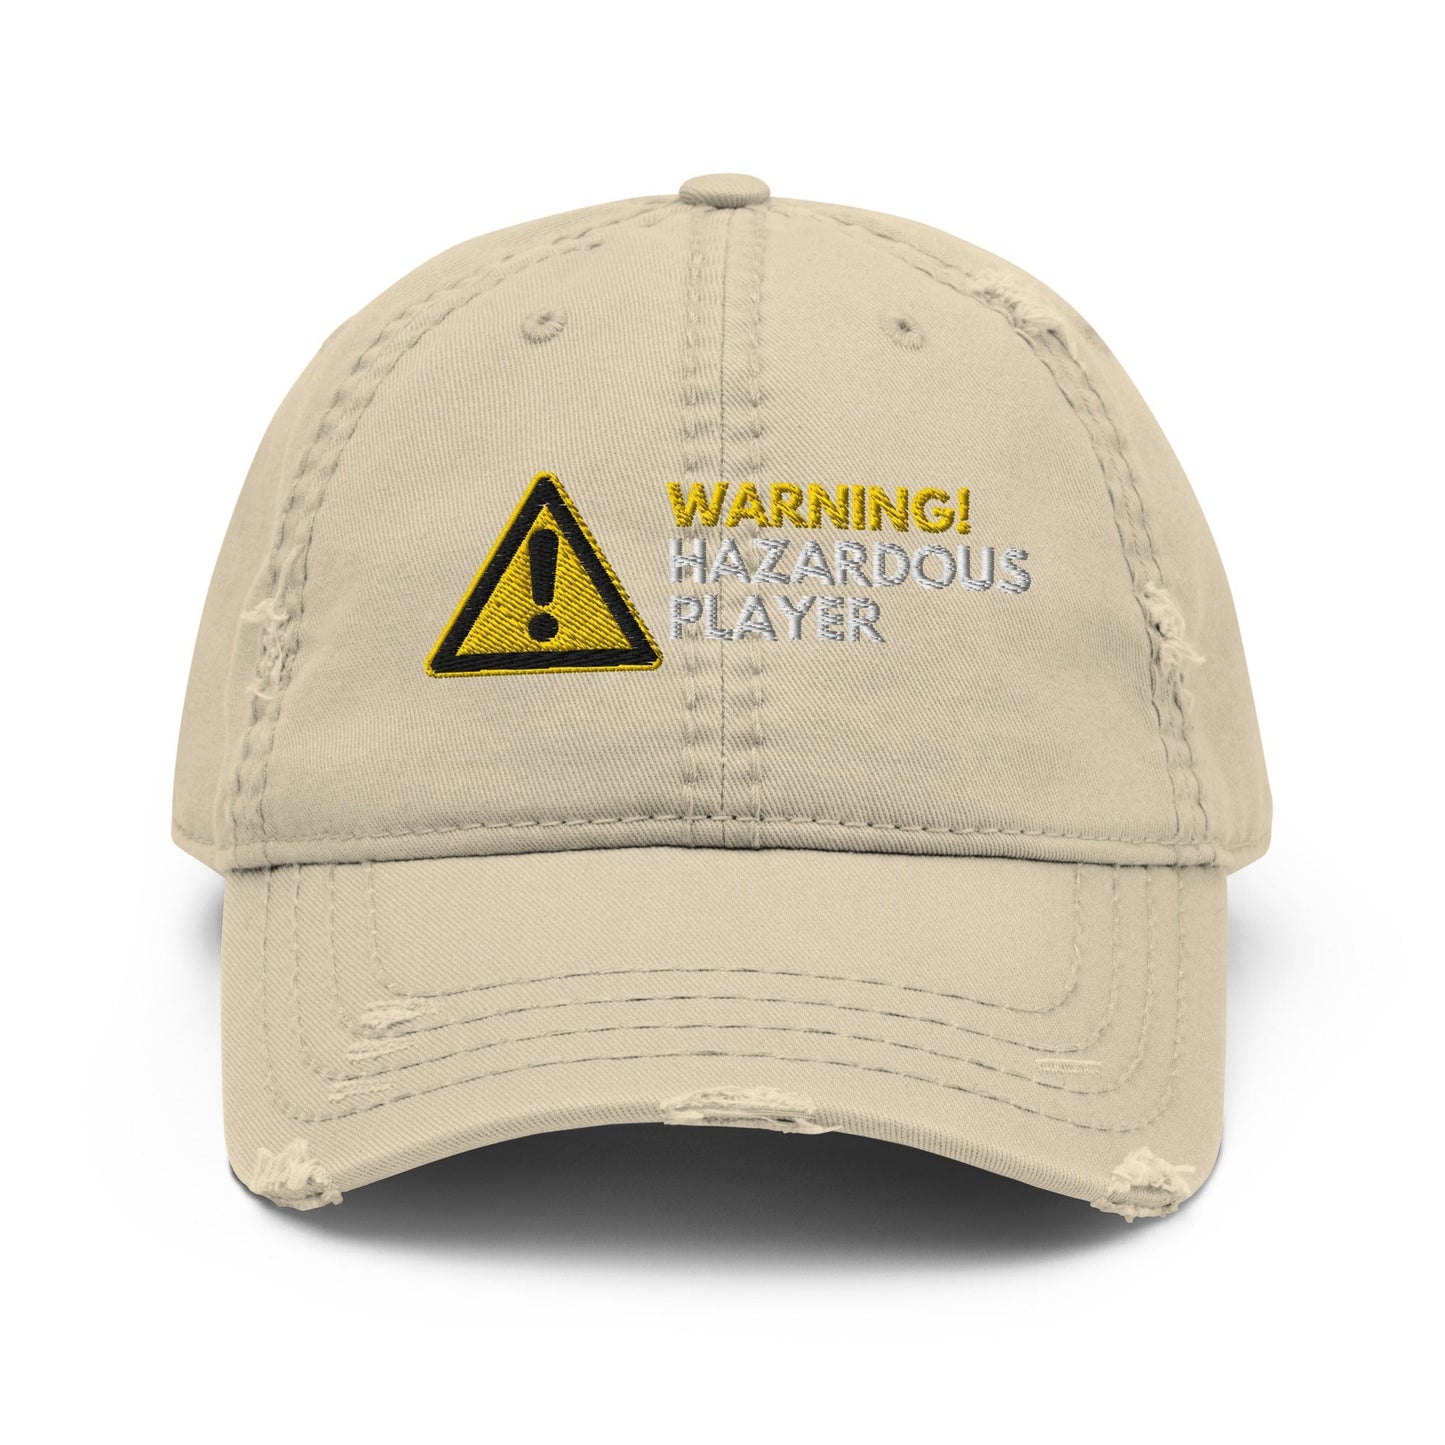 Funny Golfer Gifts  Distressed Cap Khaki Warning Hazardous Player Distressed Hat